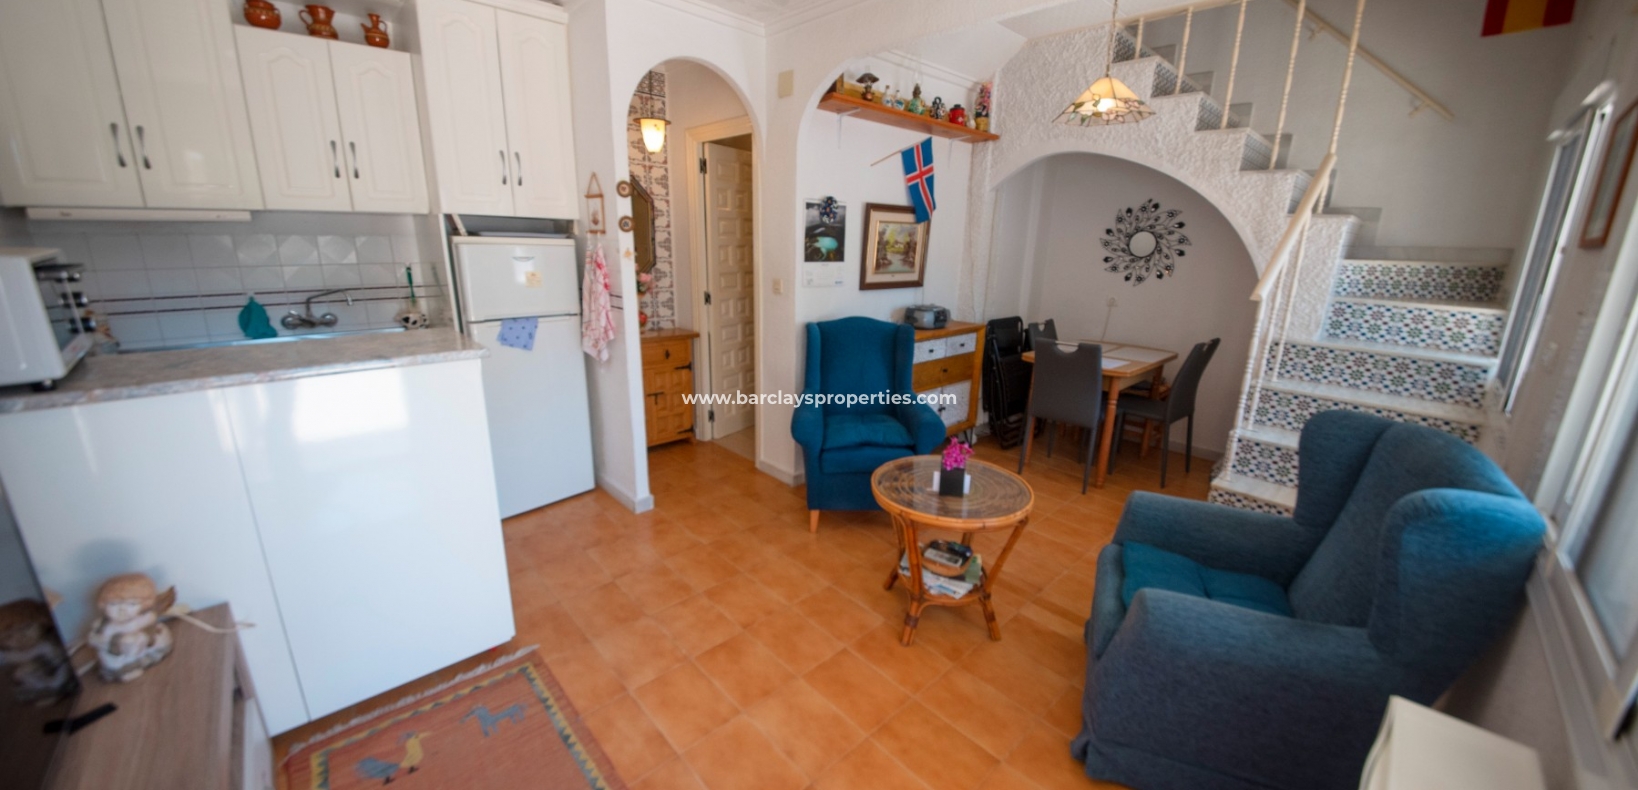 Livingroom - Property For Sale In La Marina, Spain 